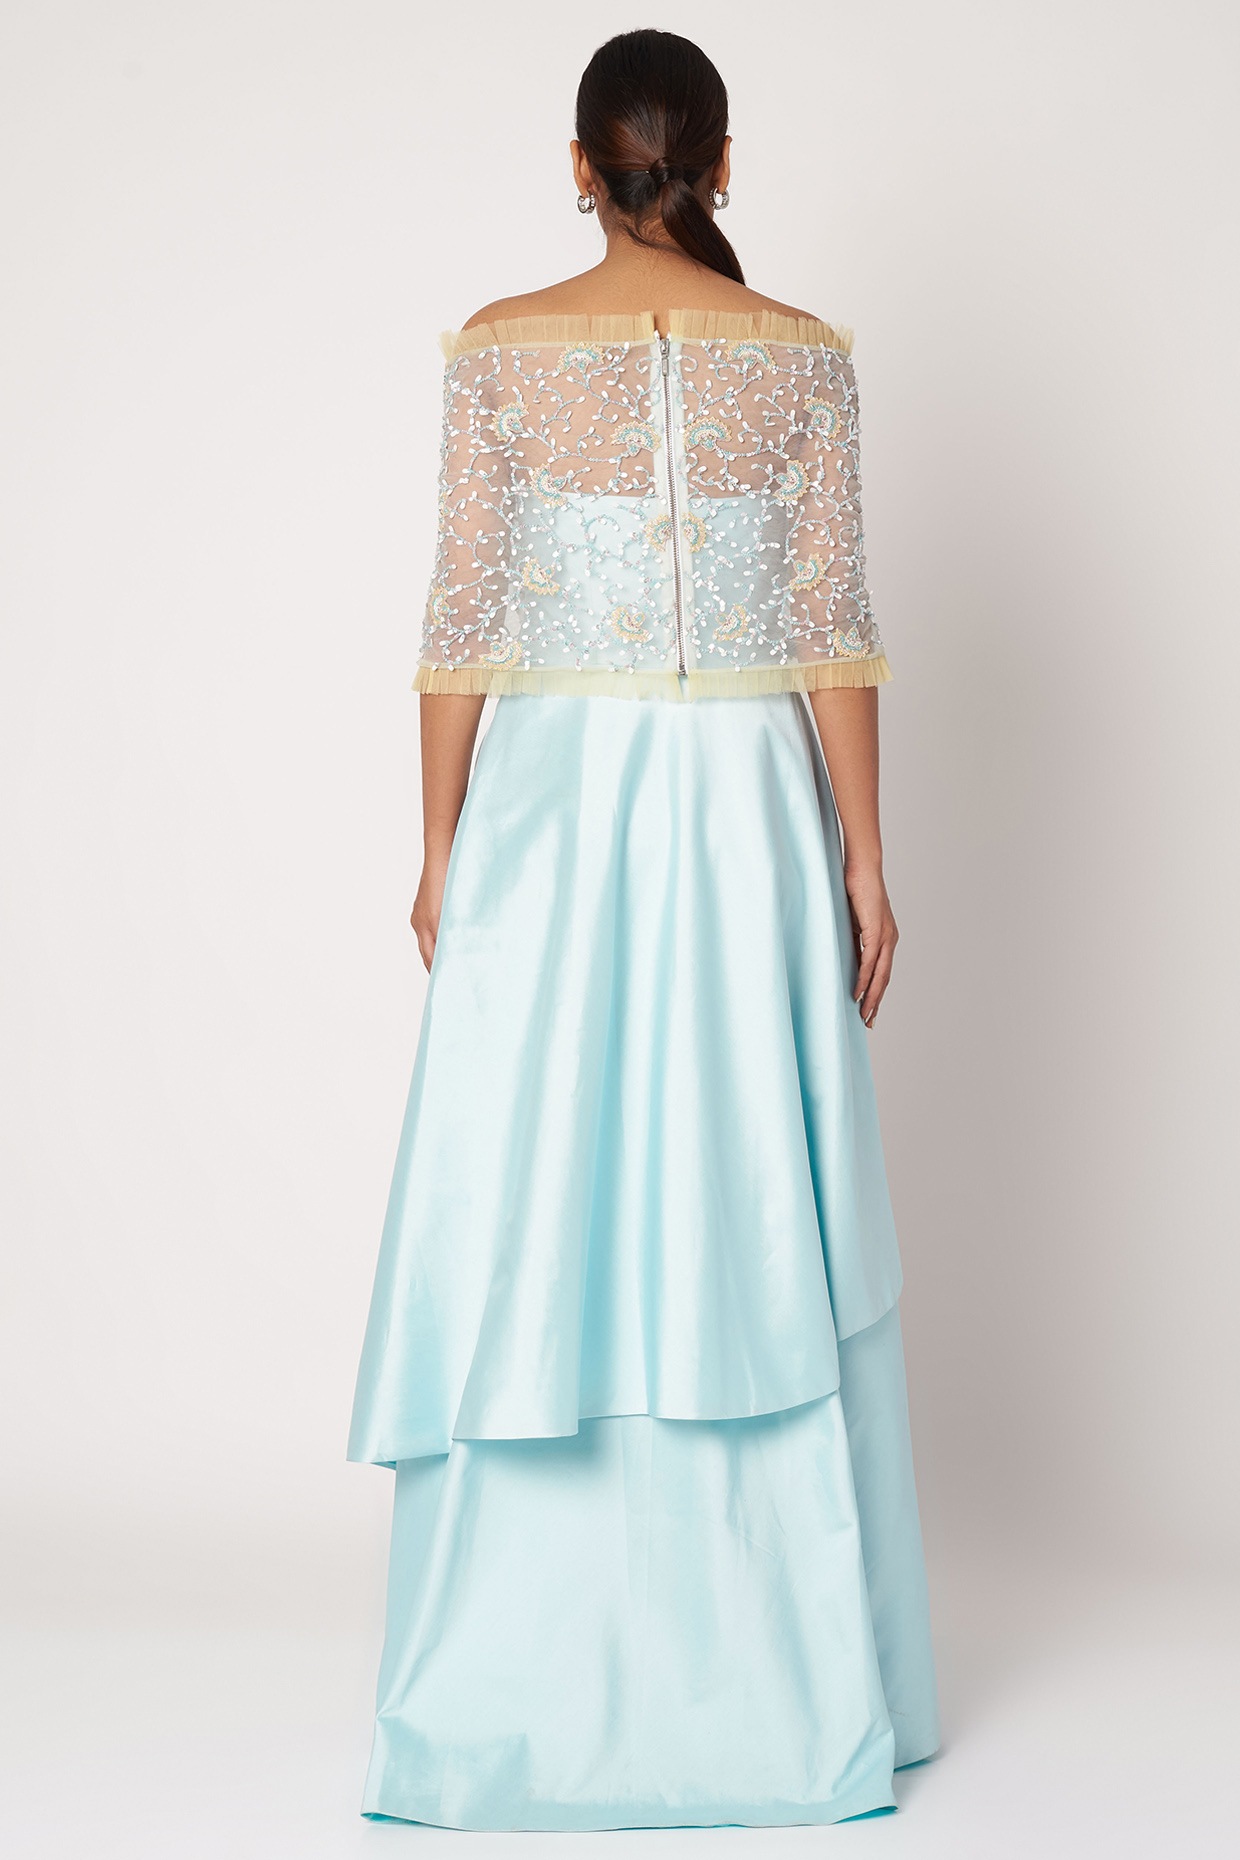 Fantasy Theme Royal Blue Lace Wedding Dress with Black Cape | MAUDE – ieie